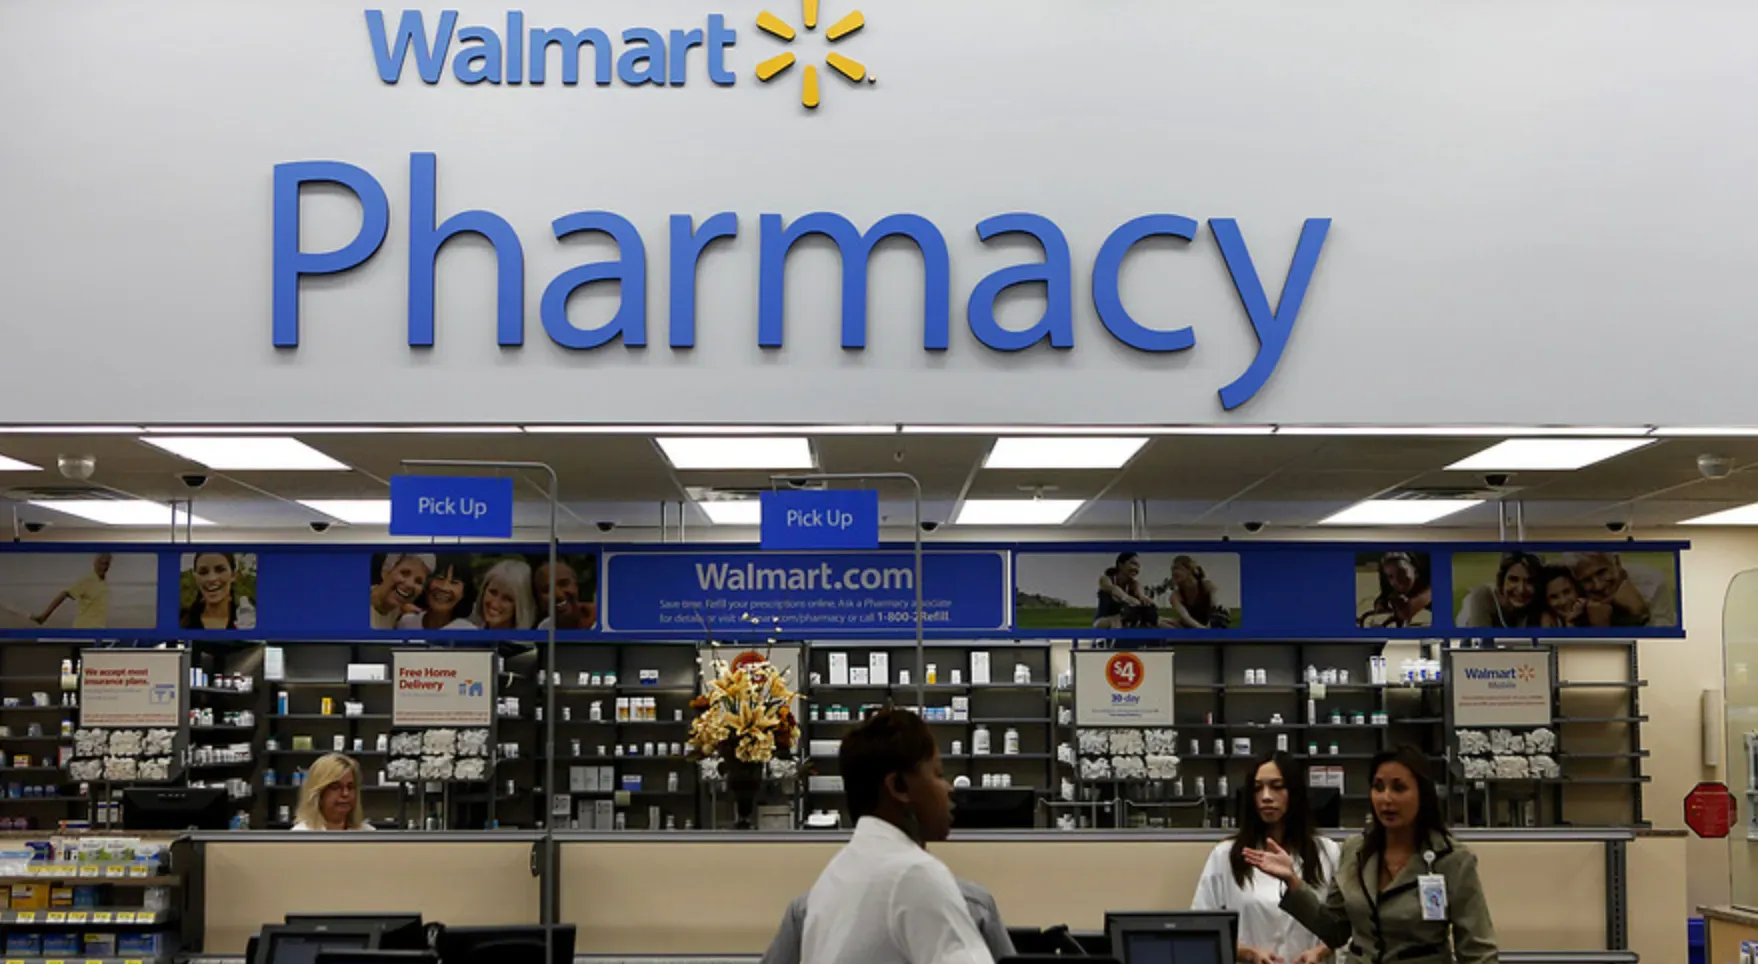 What is Walmart Pharmacy?